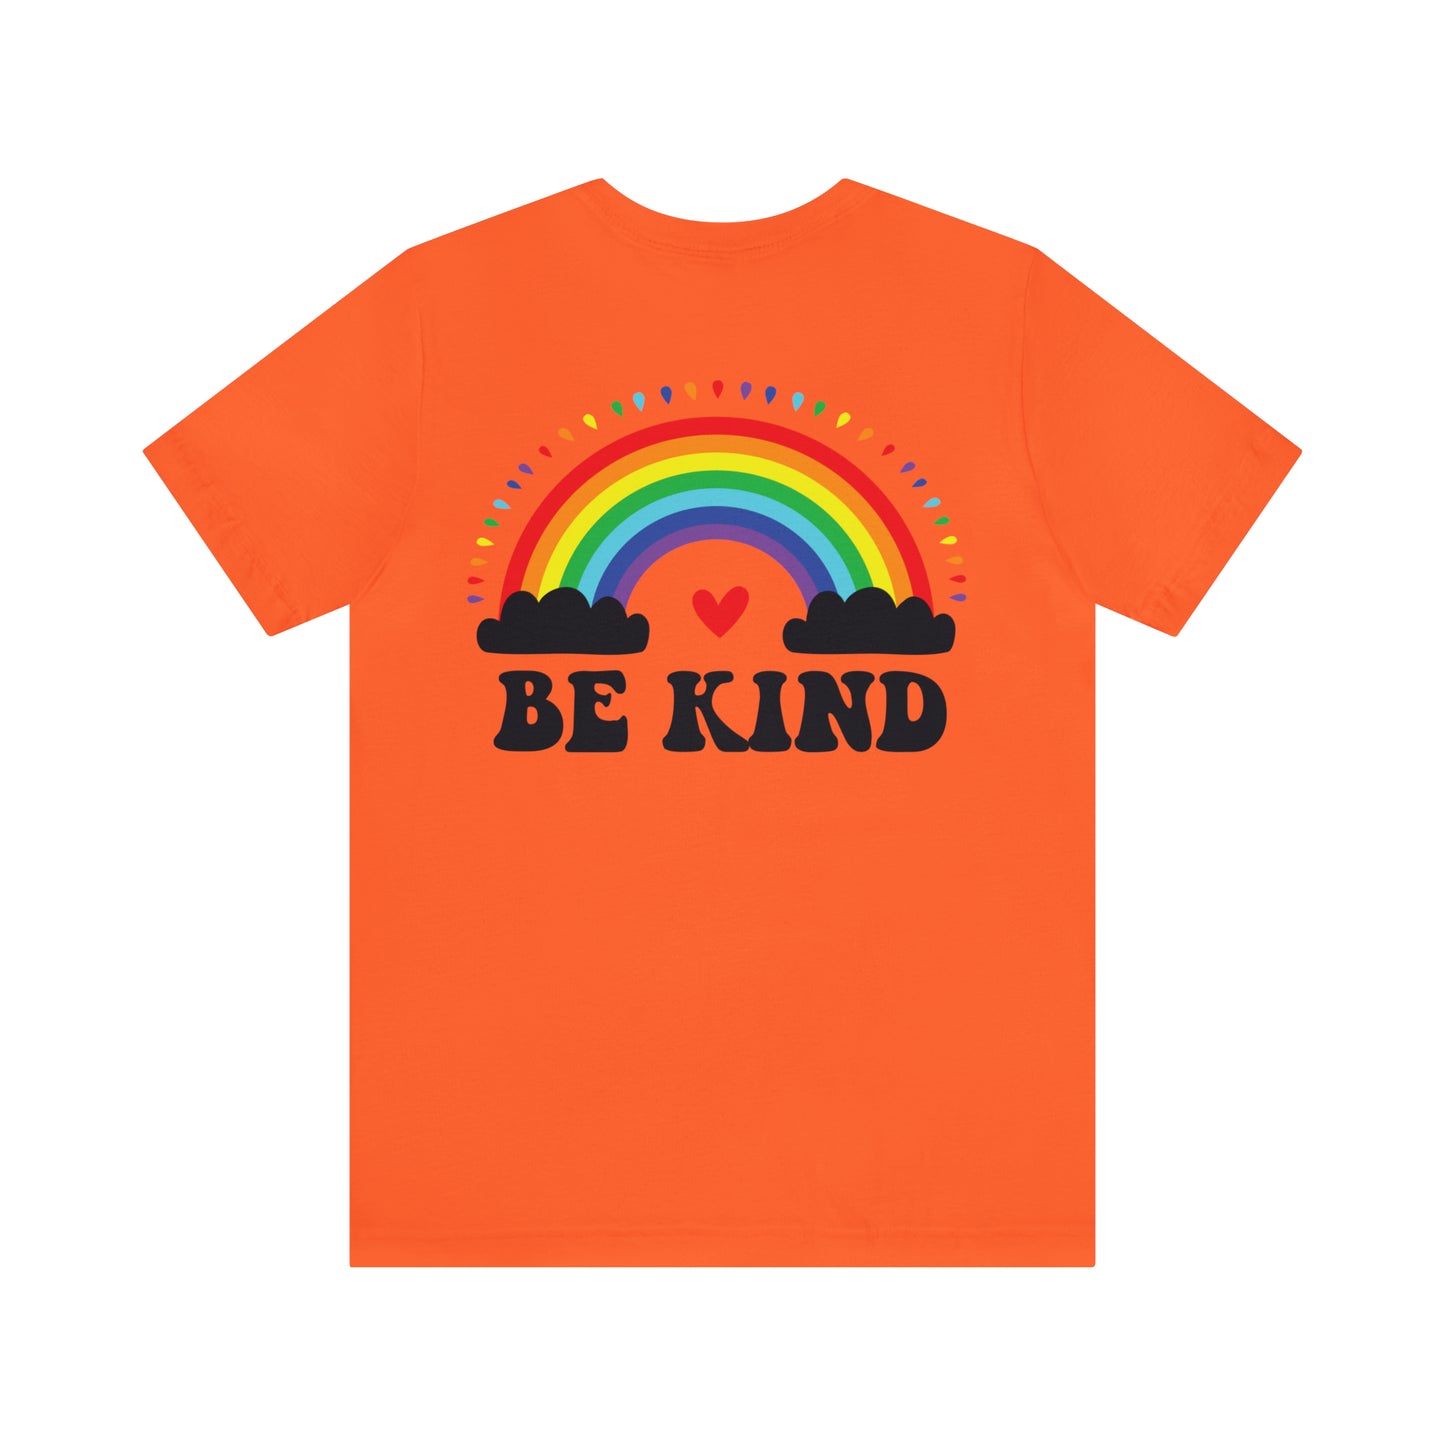 Be Kind To Your Mind Shirt, Kindness Shirt, Mental Health Awareness Shirt, Mental Health Shirt, Inspirational Shirt, T631